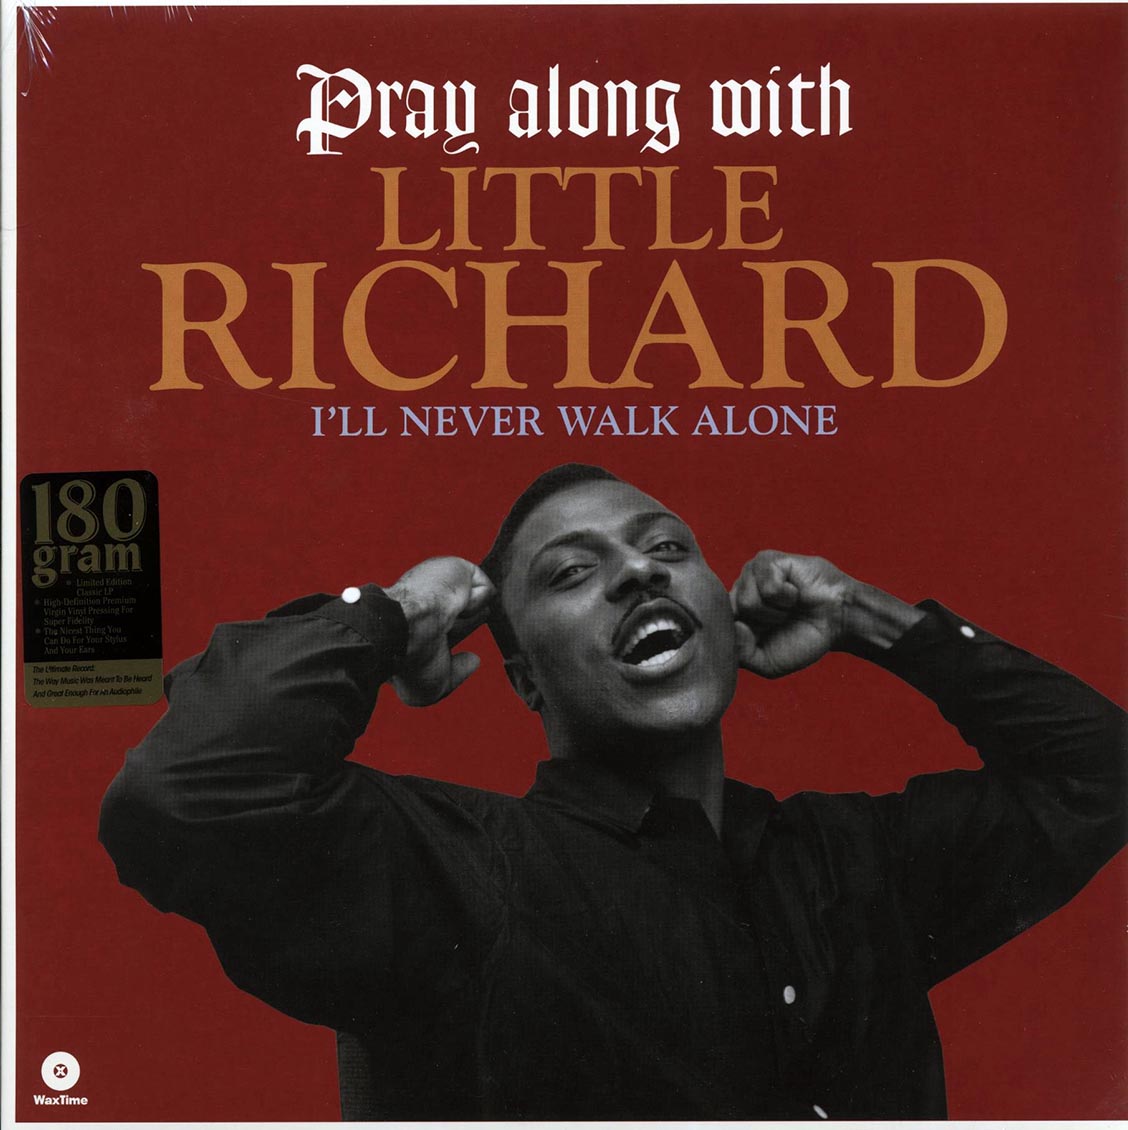 Little Richard "I'll Never Walk Alone" LP